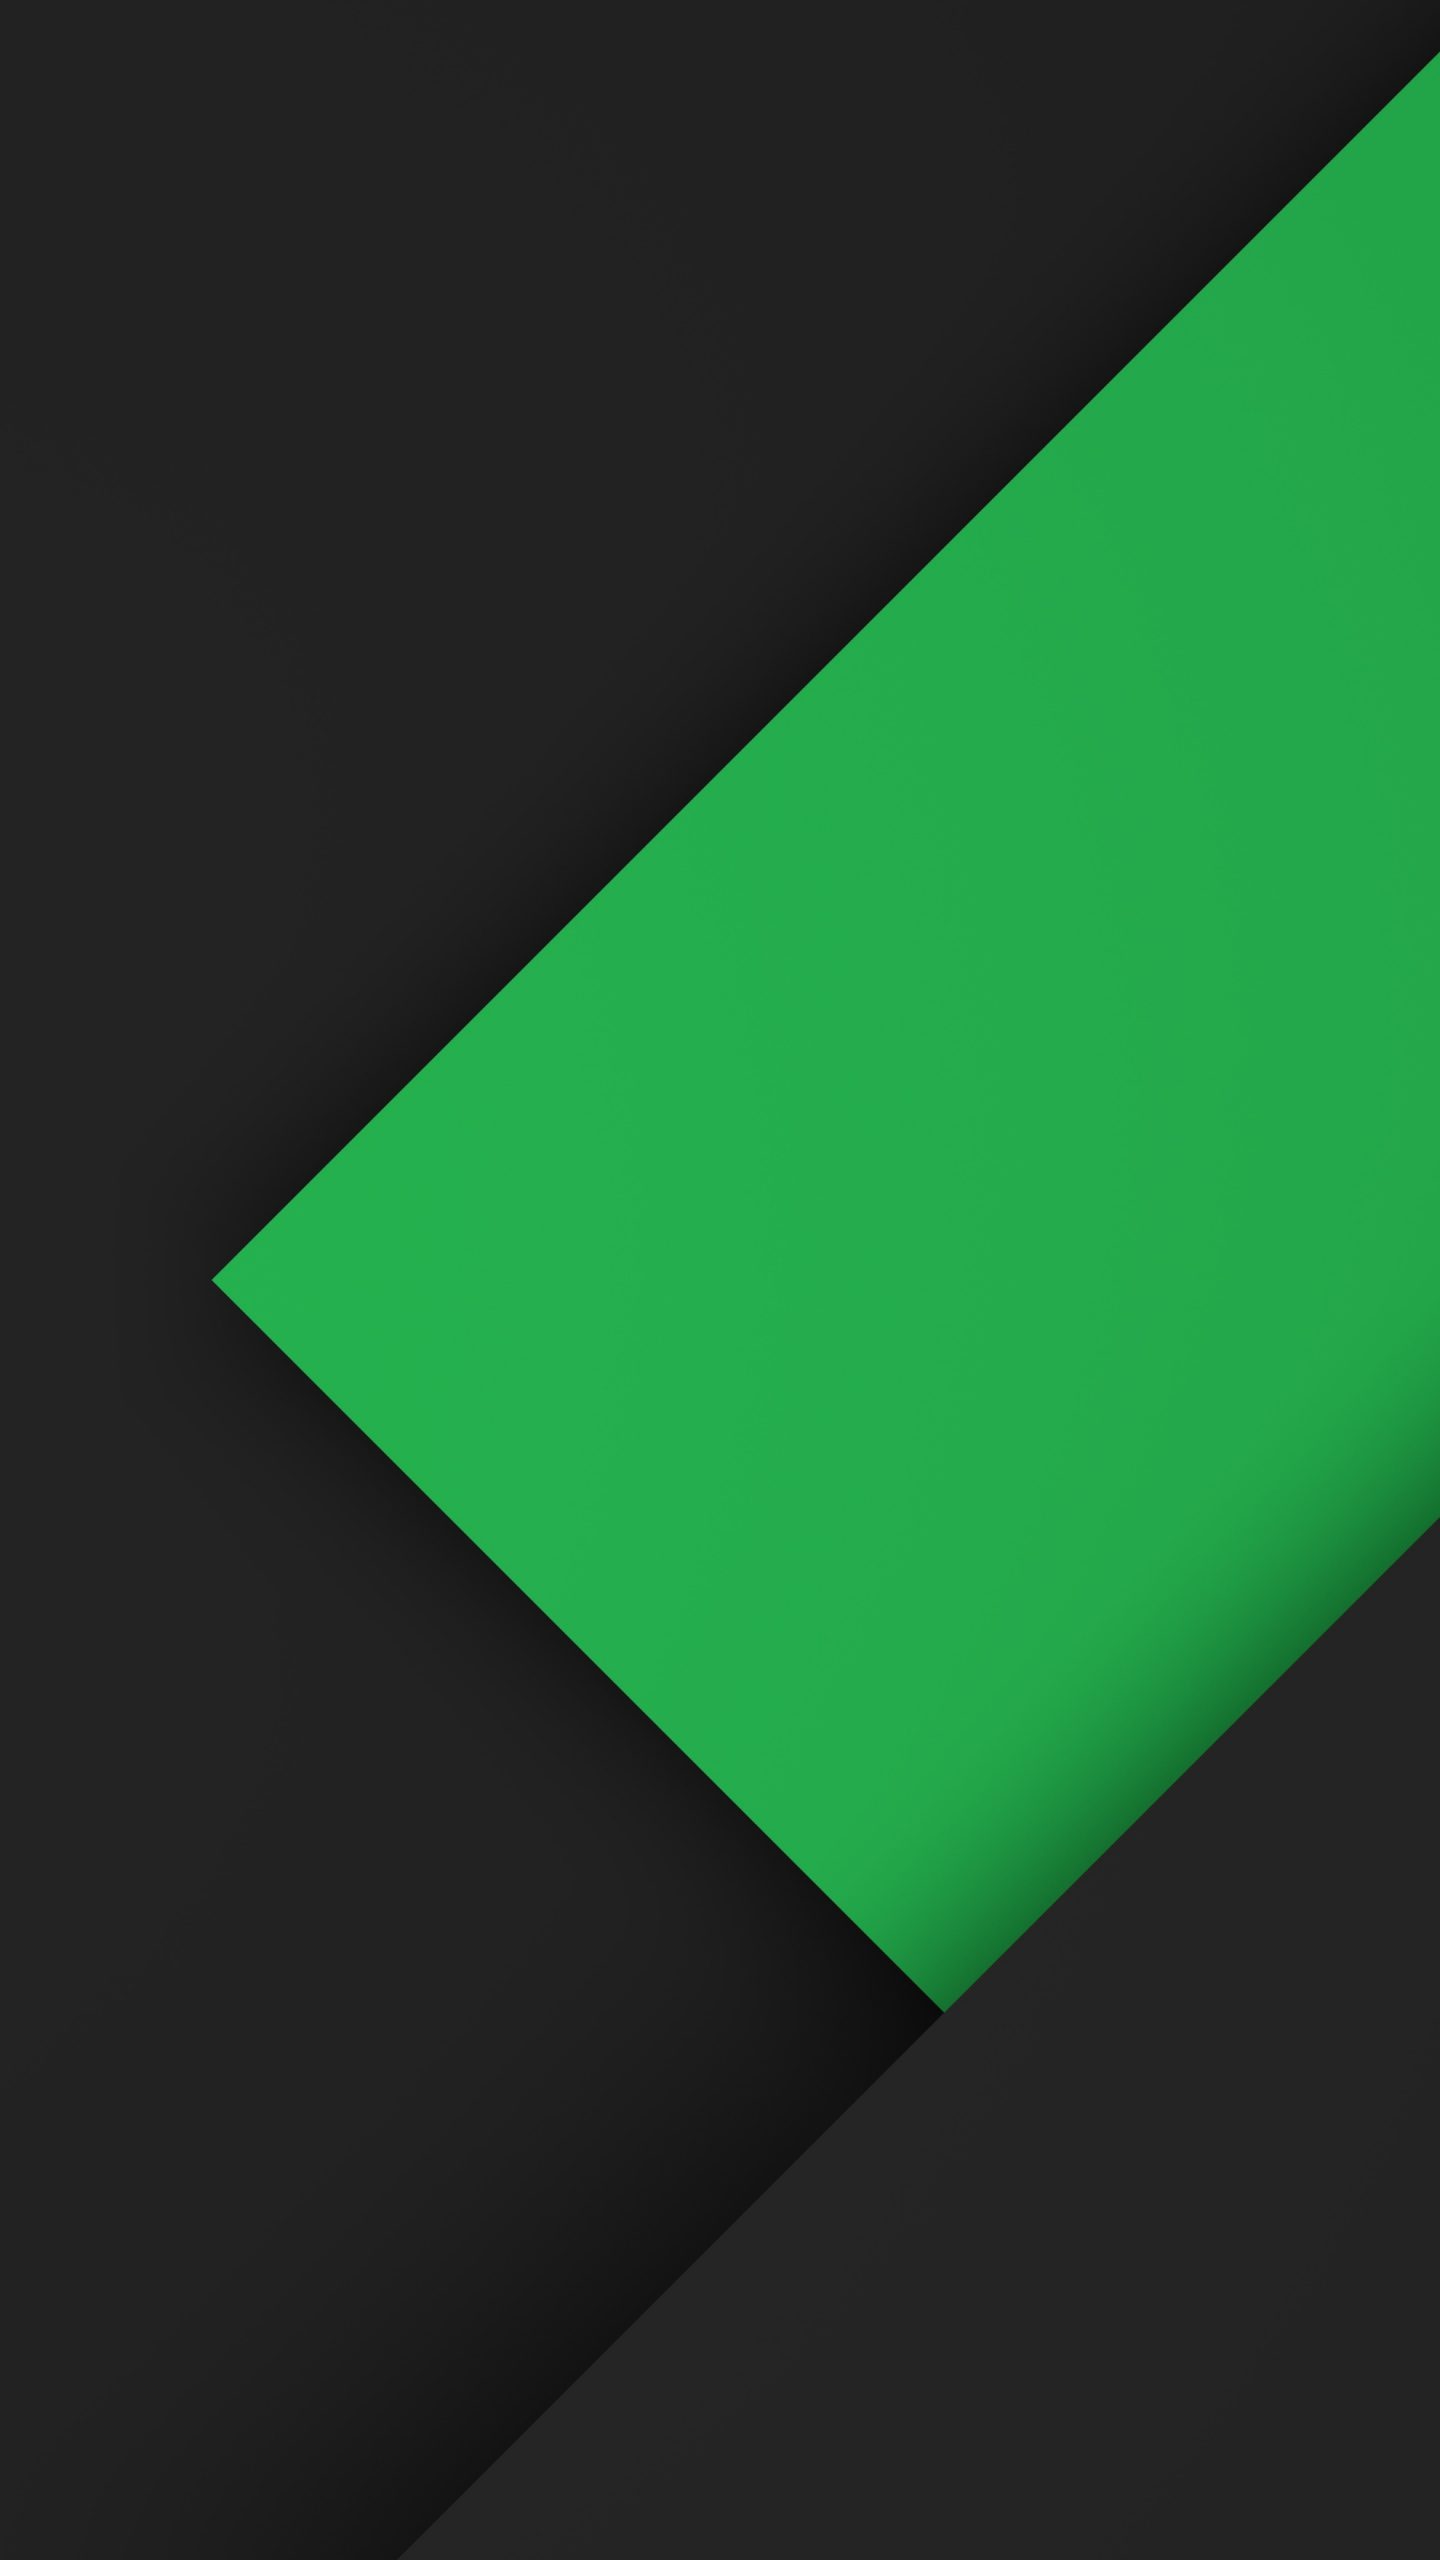 Dark Green 3d New Wallpaper – HD Wallpapers Backgrounds Desktop, iphone & Android Free Download